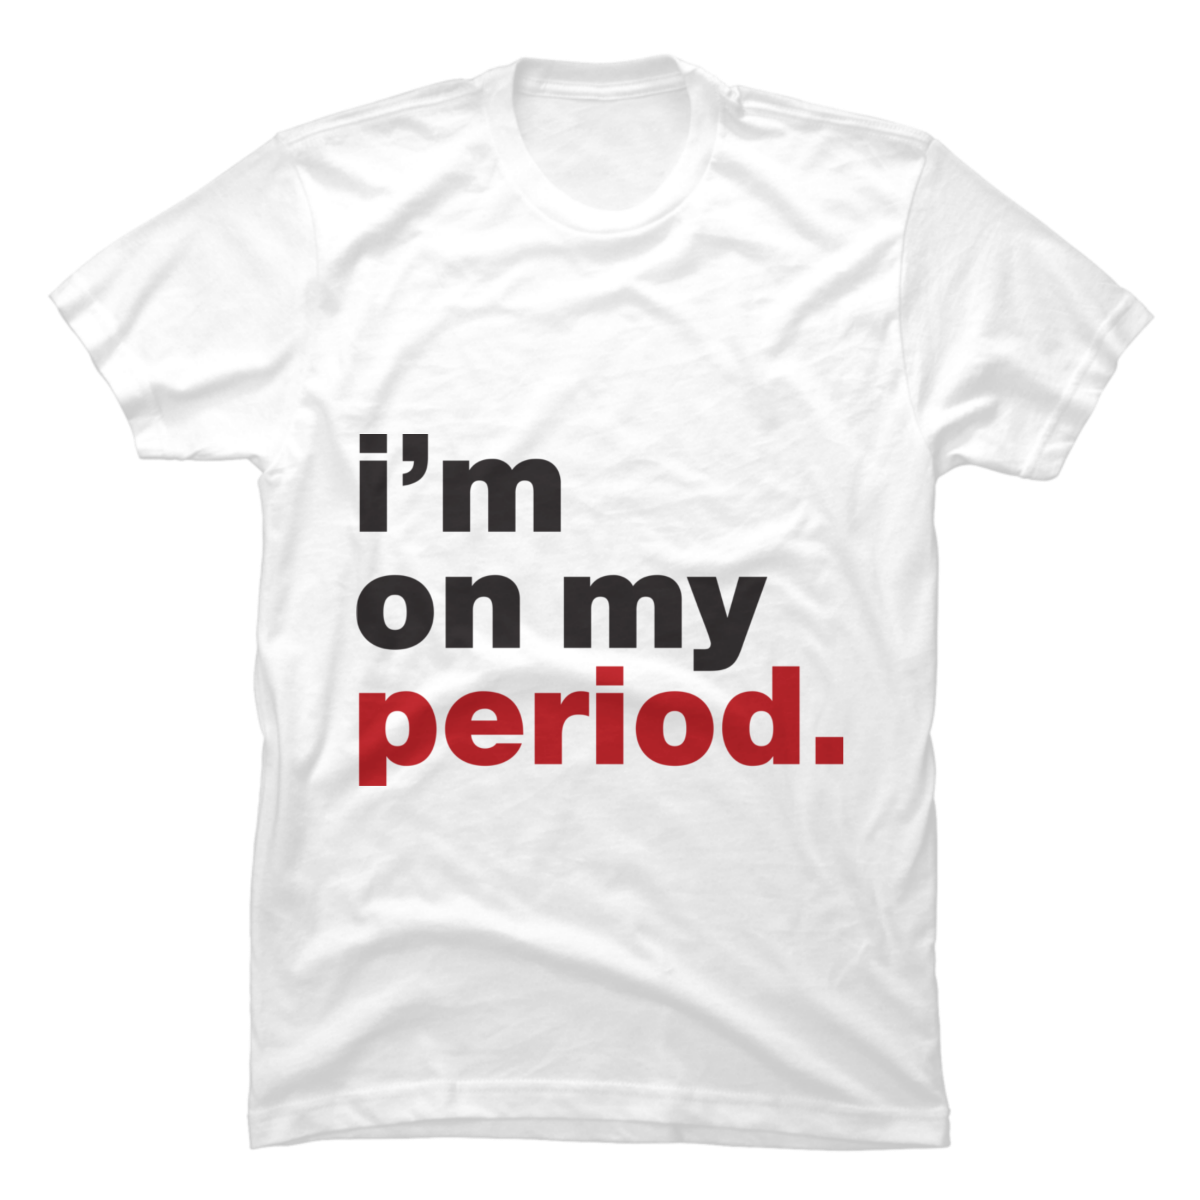 period t shirt